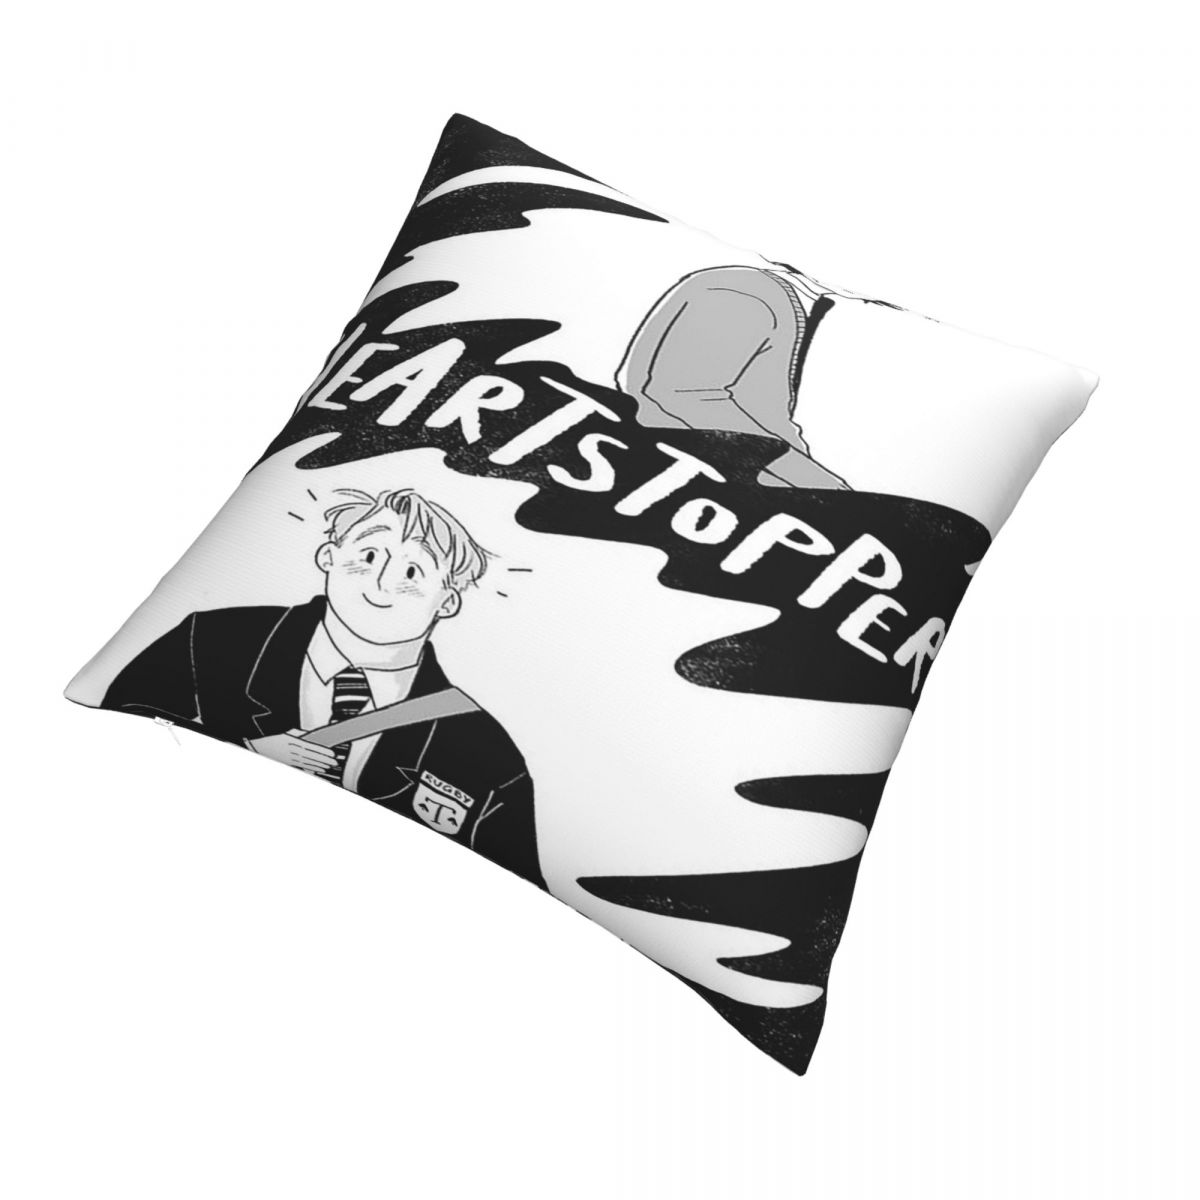 Heartstopper Plaid Pillowcase Printing Polyester Cushion Cover Cartoon Throw Pillow Case Cover Home 40X40cm